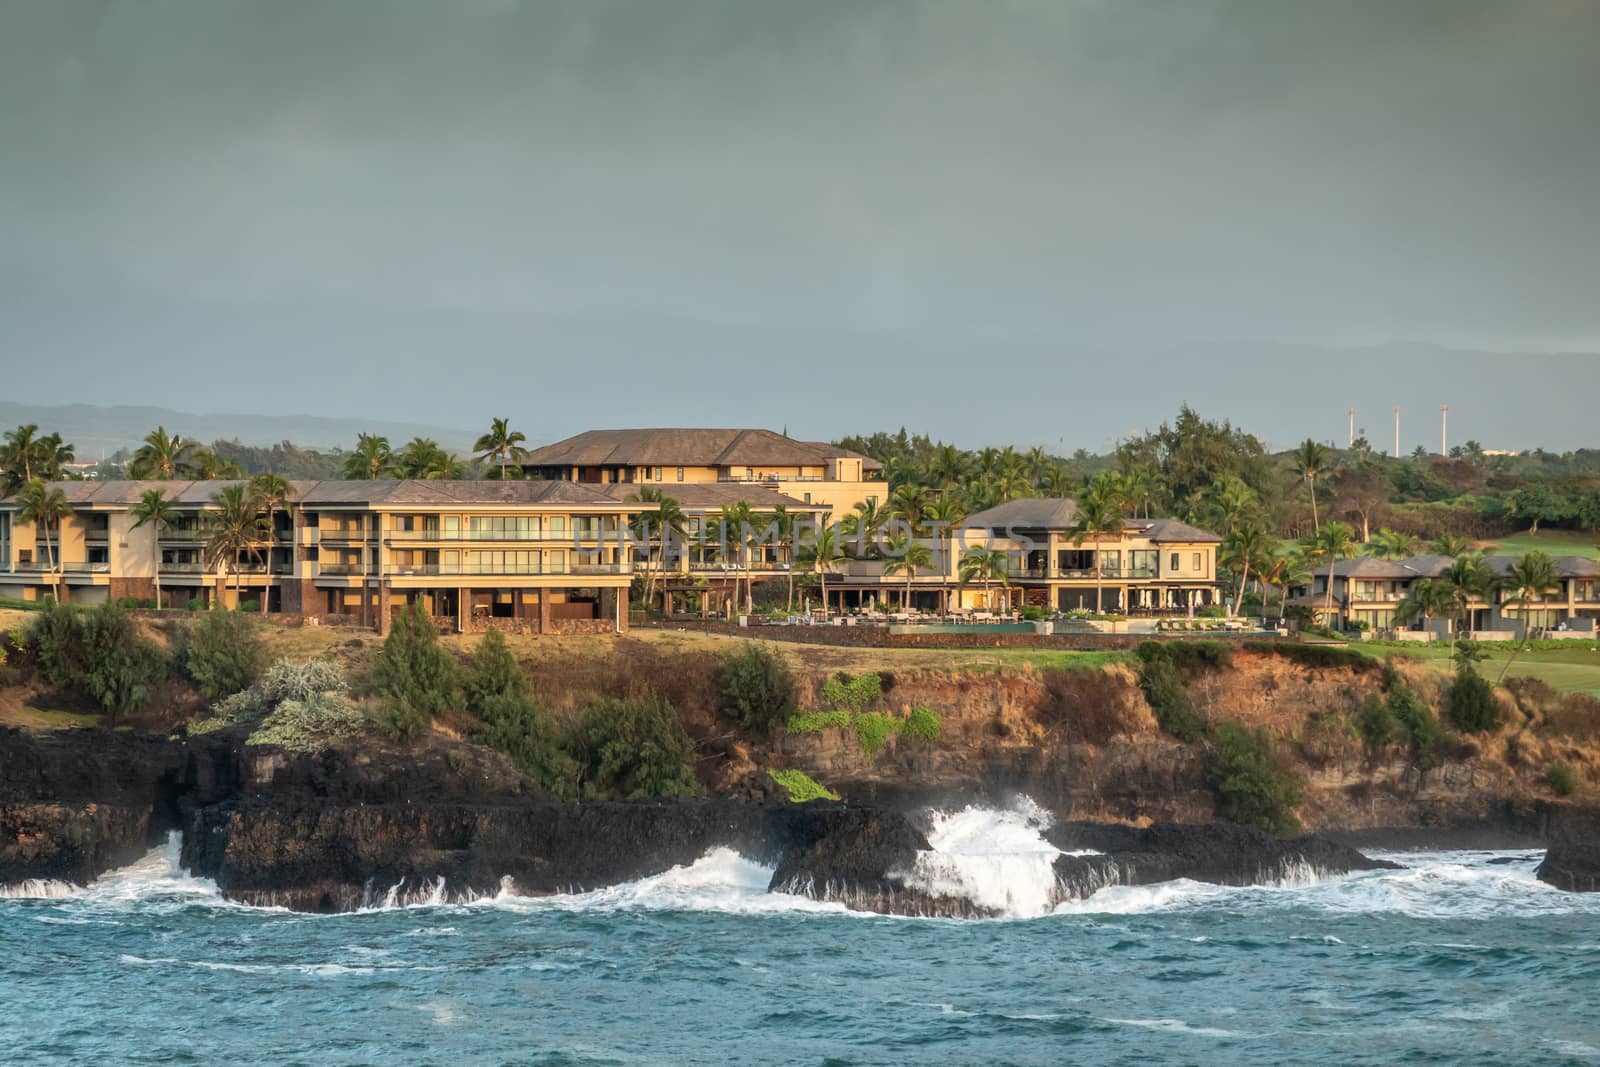 Nawiliwili, Kauai, Hawaii, USA. - January 16, 2020: Early morning light on Marriott resort behind green golf course under blueish gray sky. Blue ocean crashes white on black shoreline.